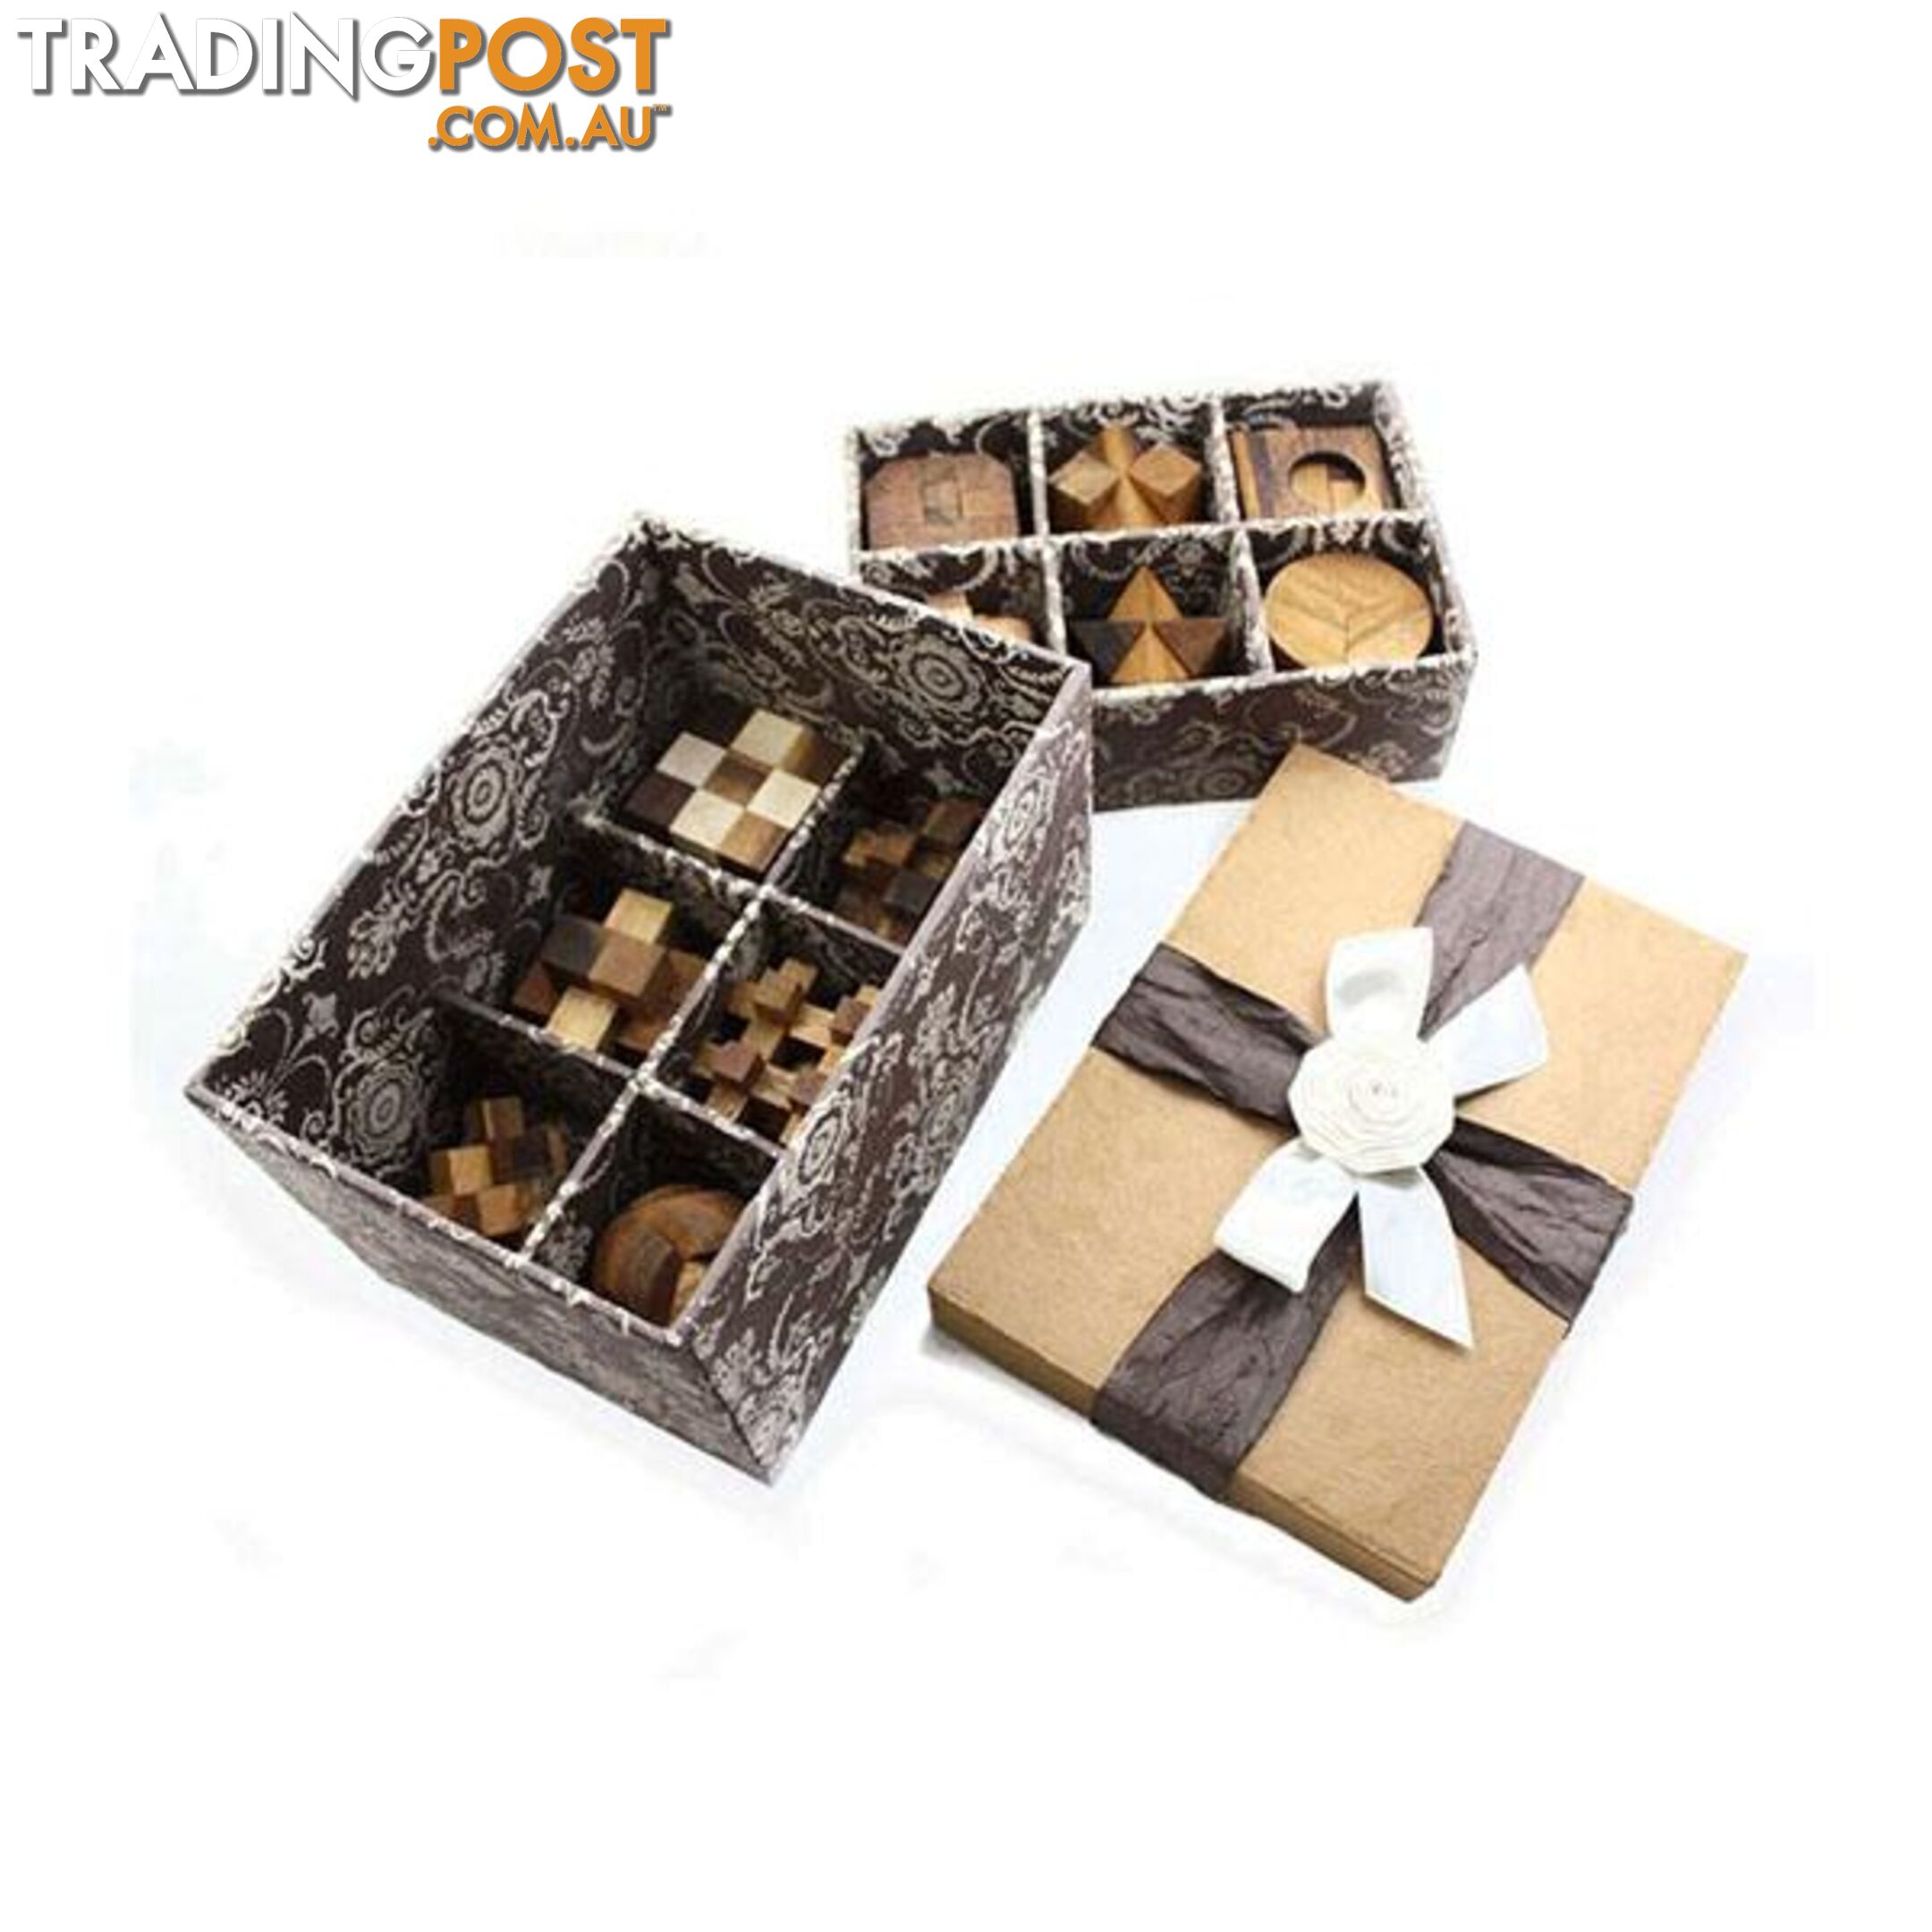 12 Puzzles Deluxe Gift Box Set - Mango Trees - 9476062138738